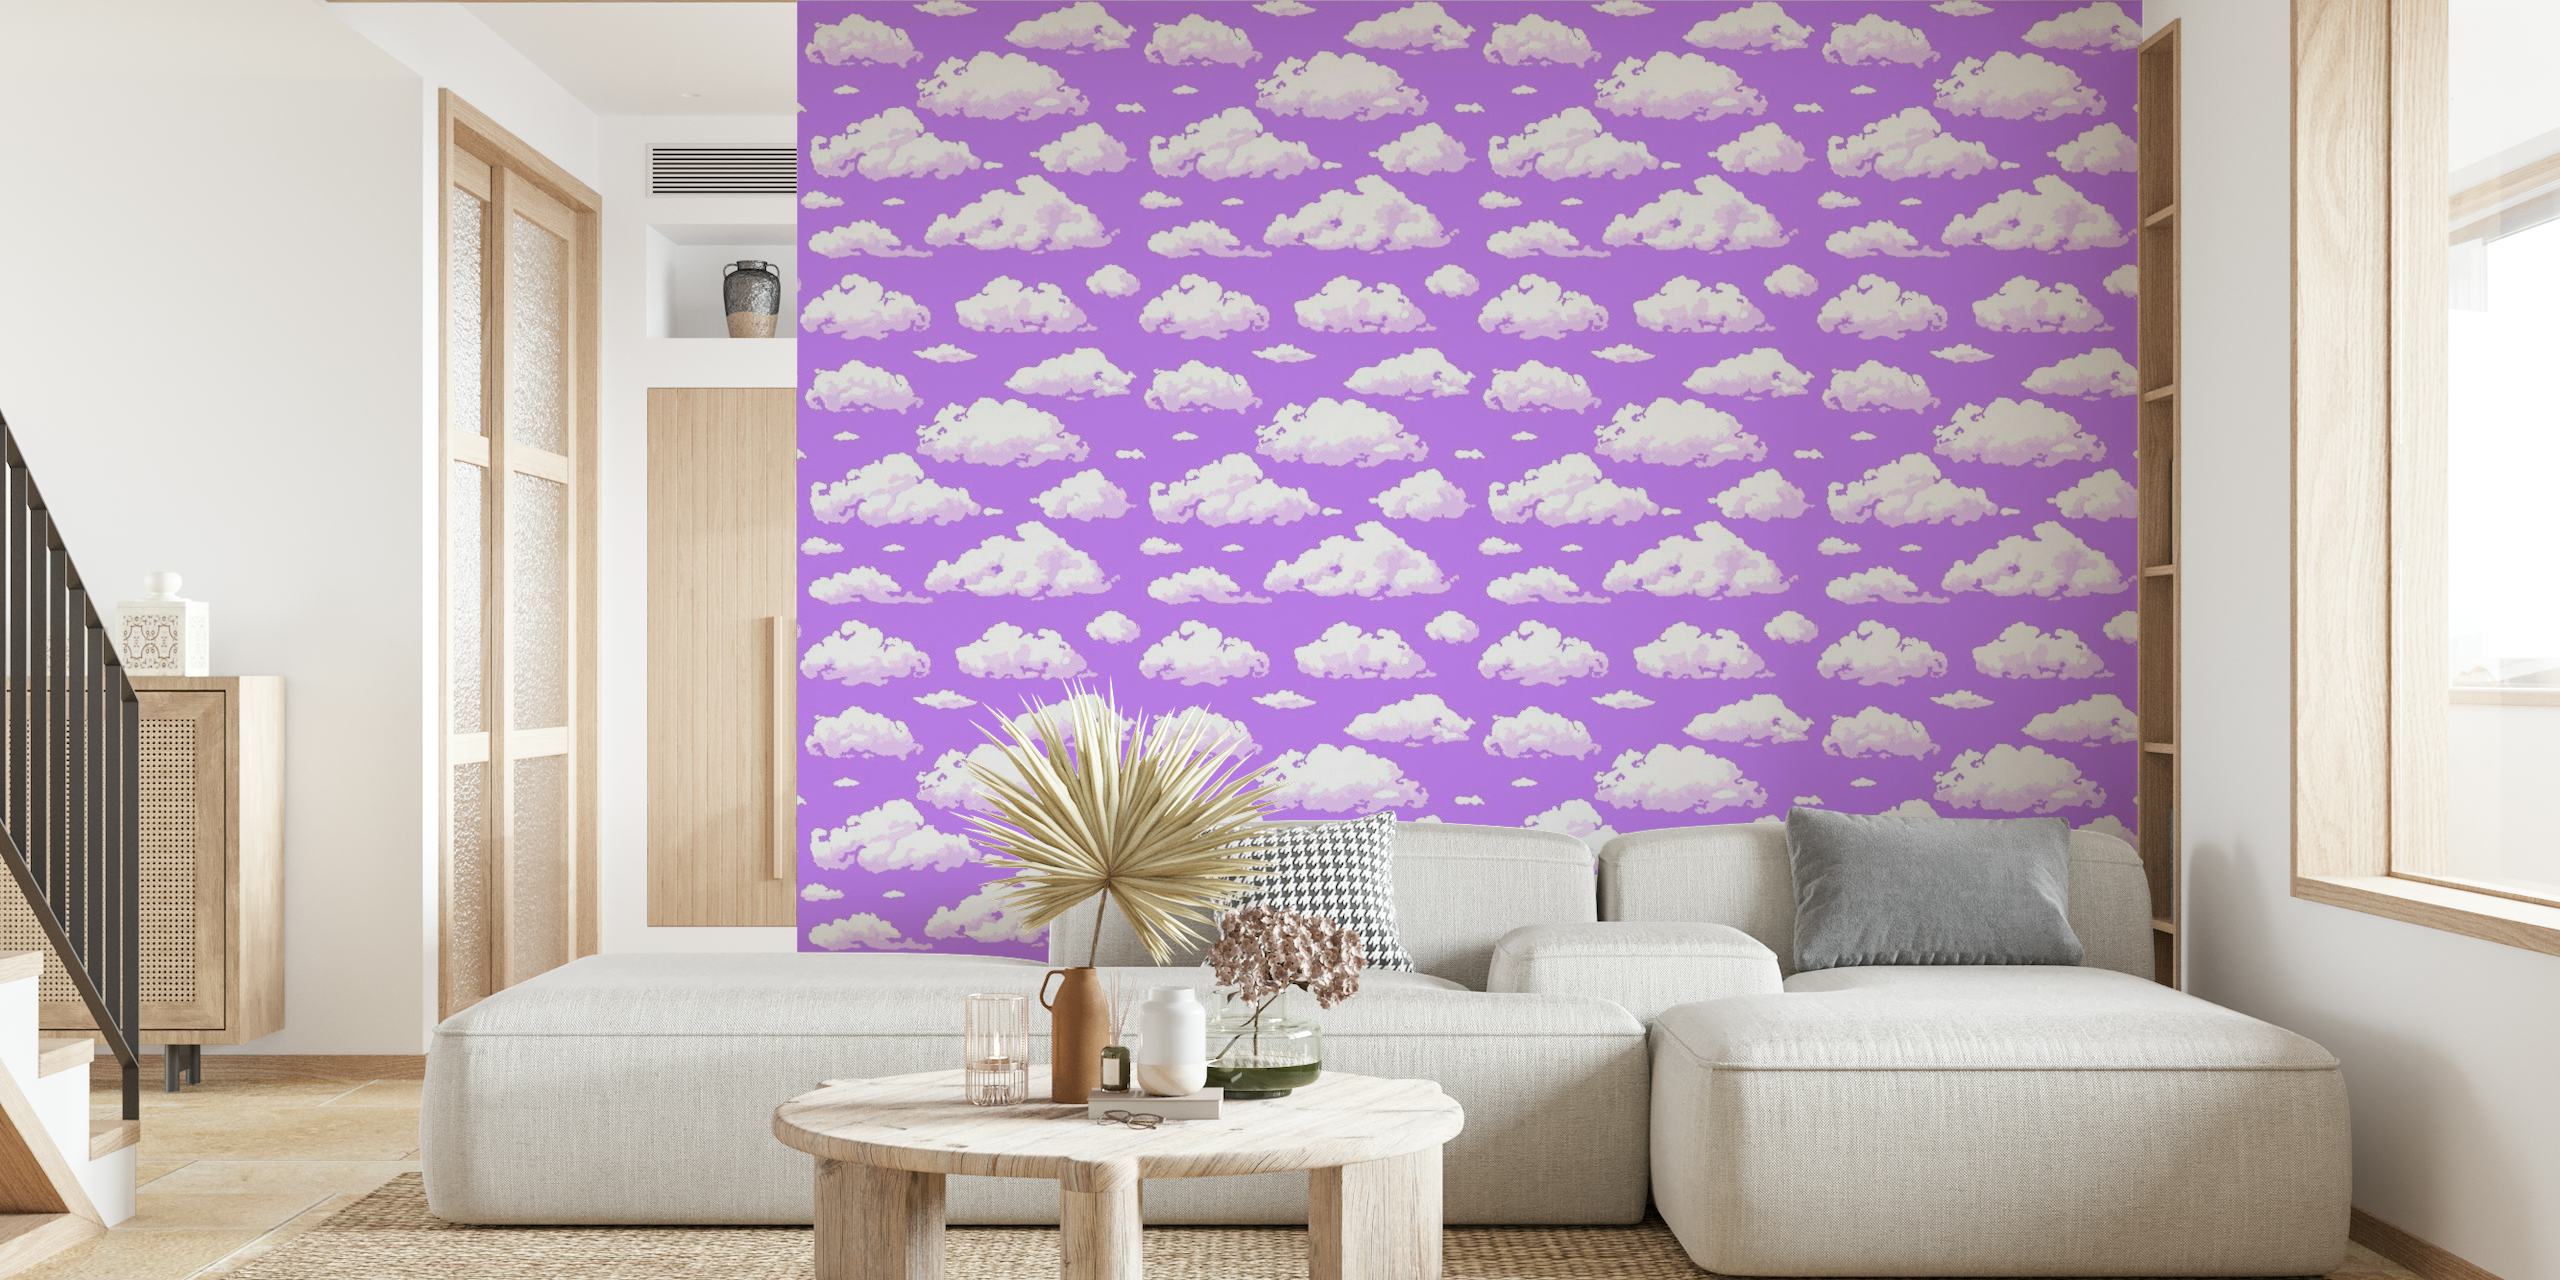 Cloudy sky 3 wallpaper